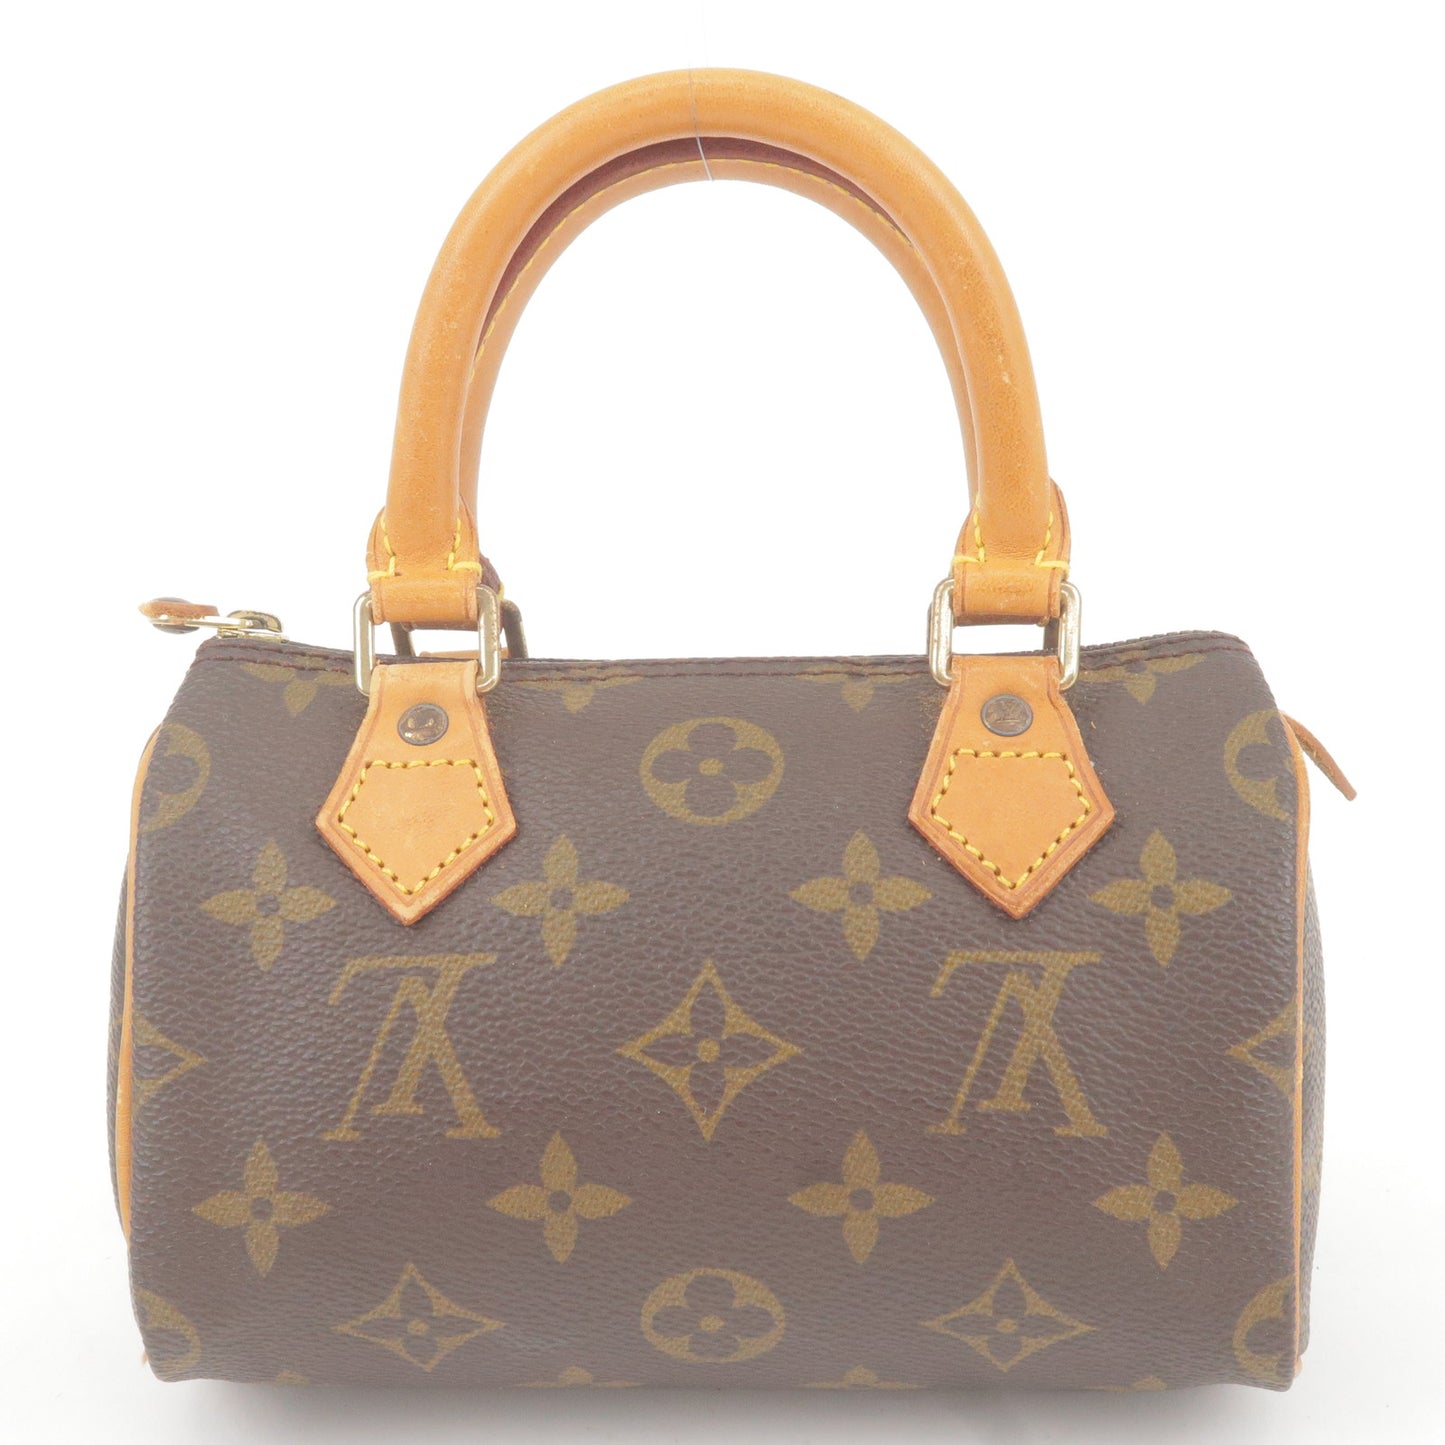 Auth Louis Vuitton Monogram Mini Speedy M41534 Women's Handbag